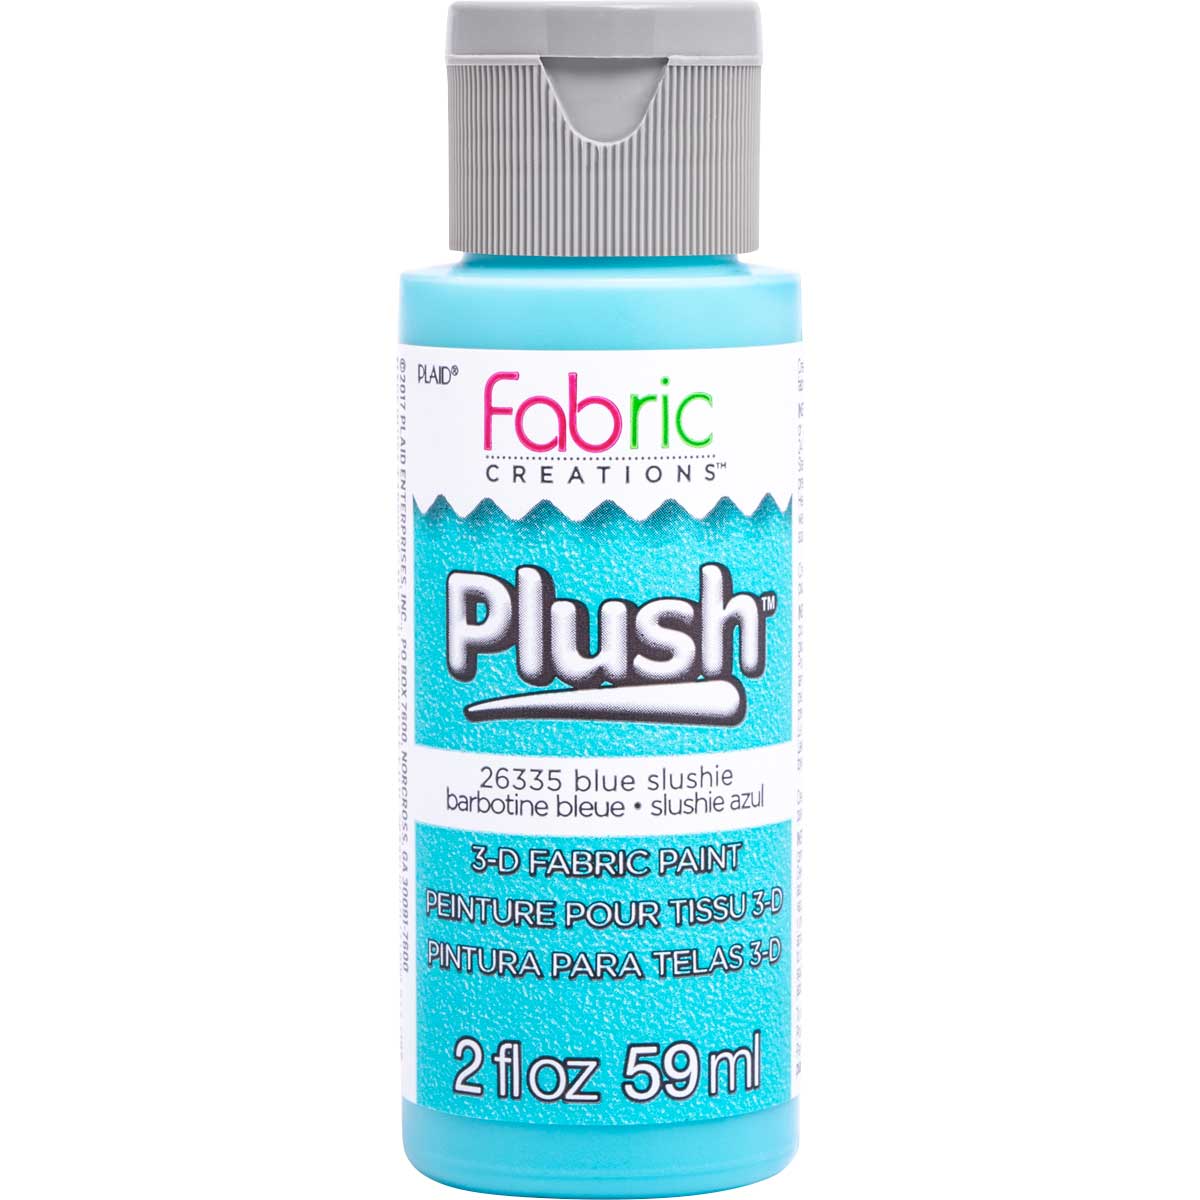 Fabric Creations™ Plush™ 3-D Fabric Paints - Blue Slushie, 2 oz. - 26335